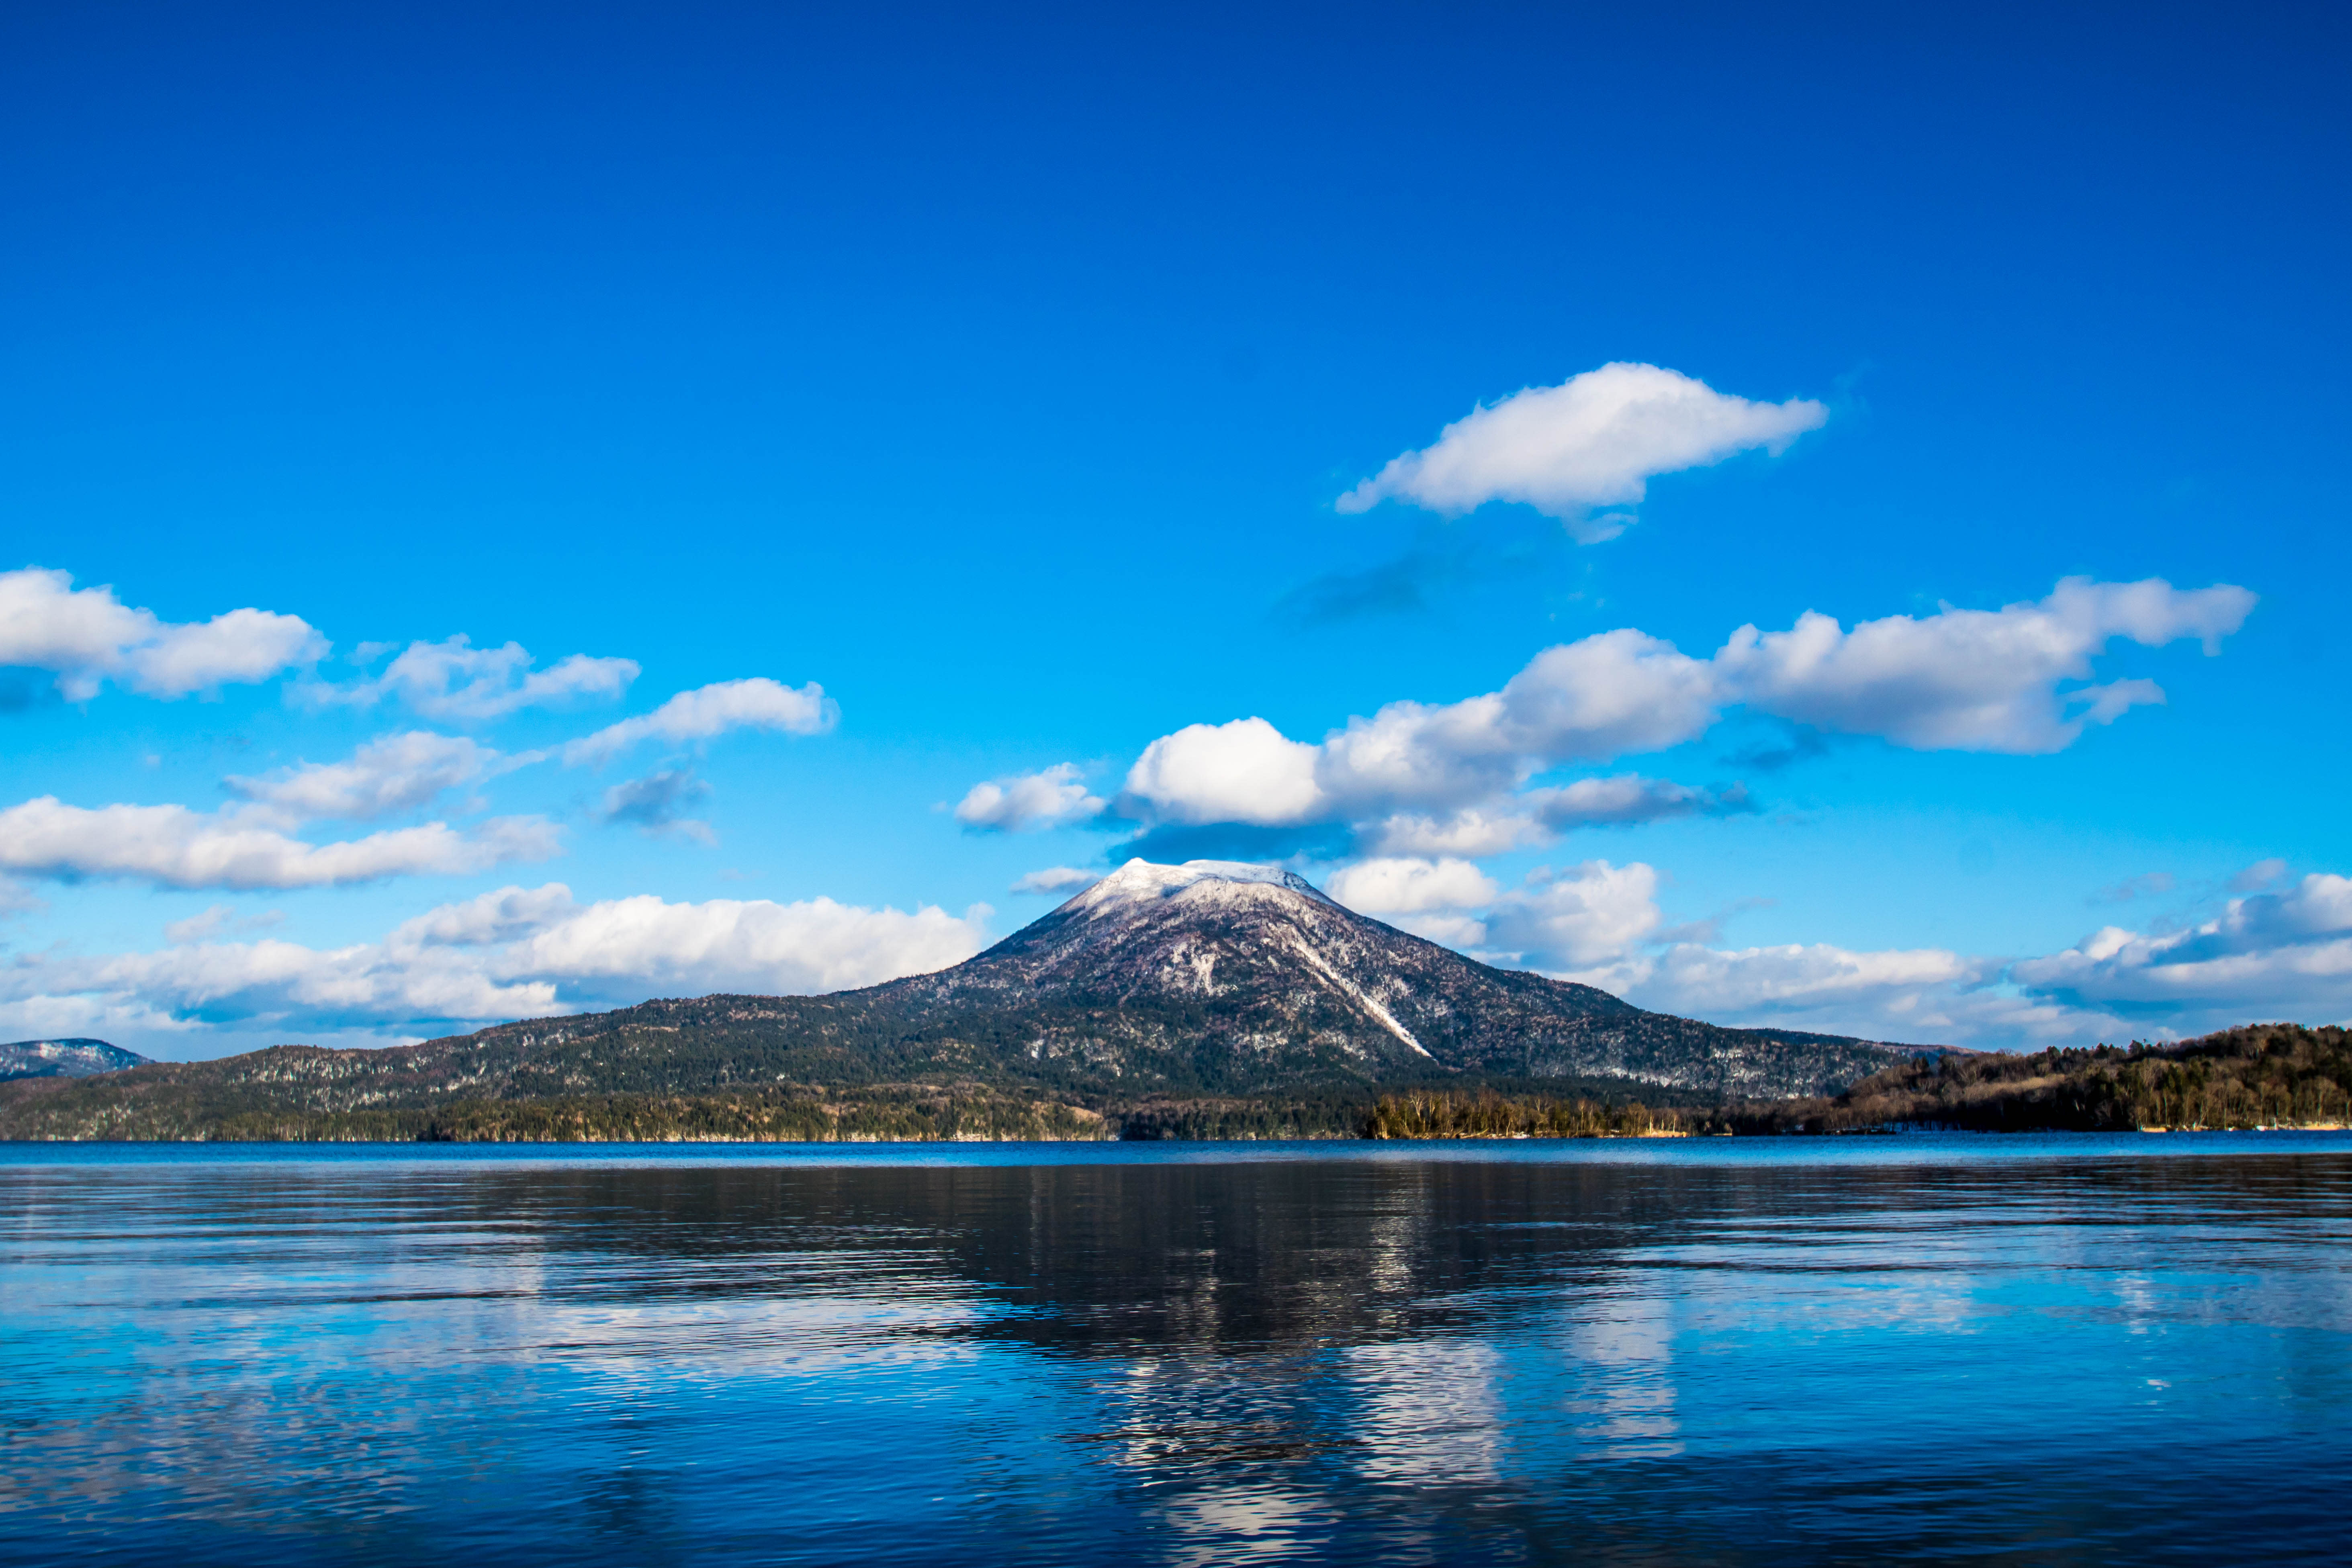 Tour Lake Akan on a Canoe | National Parks of Japan